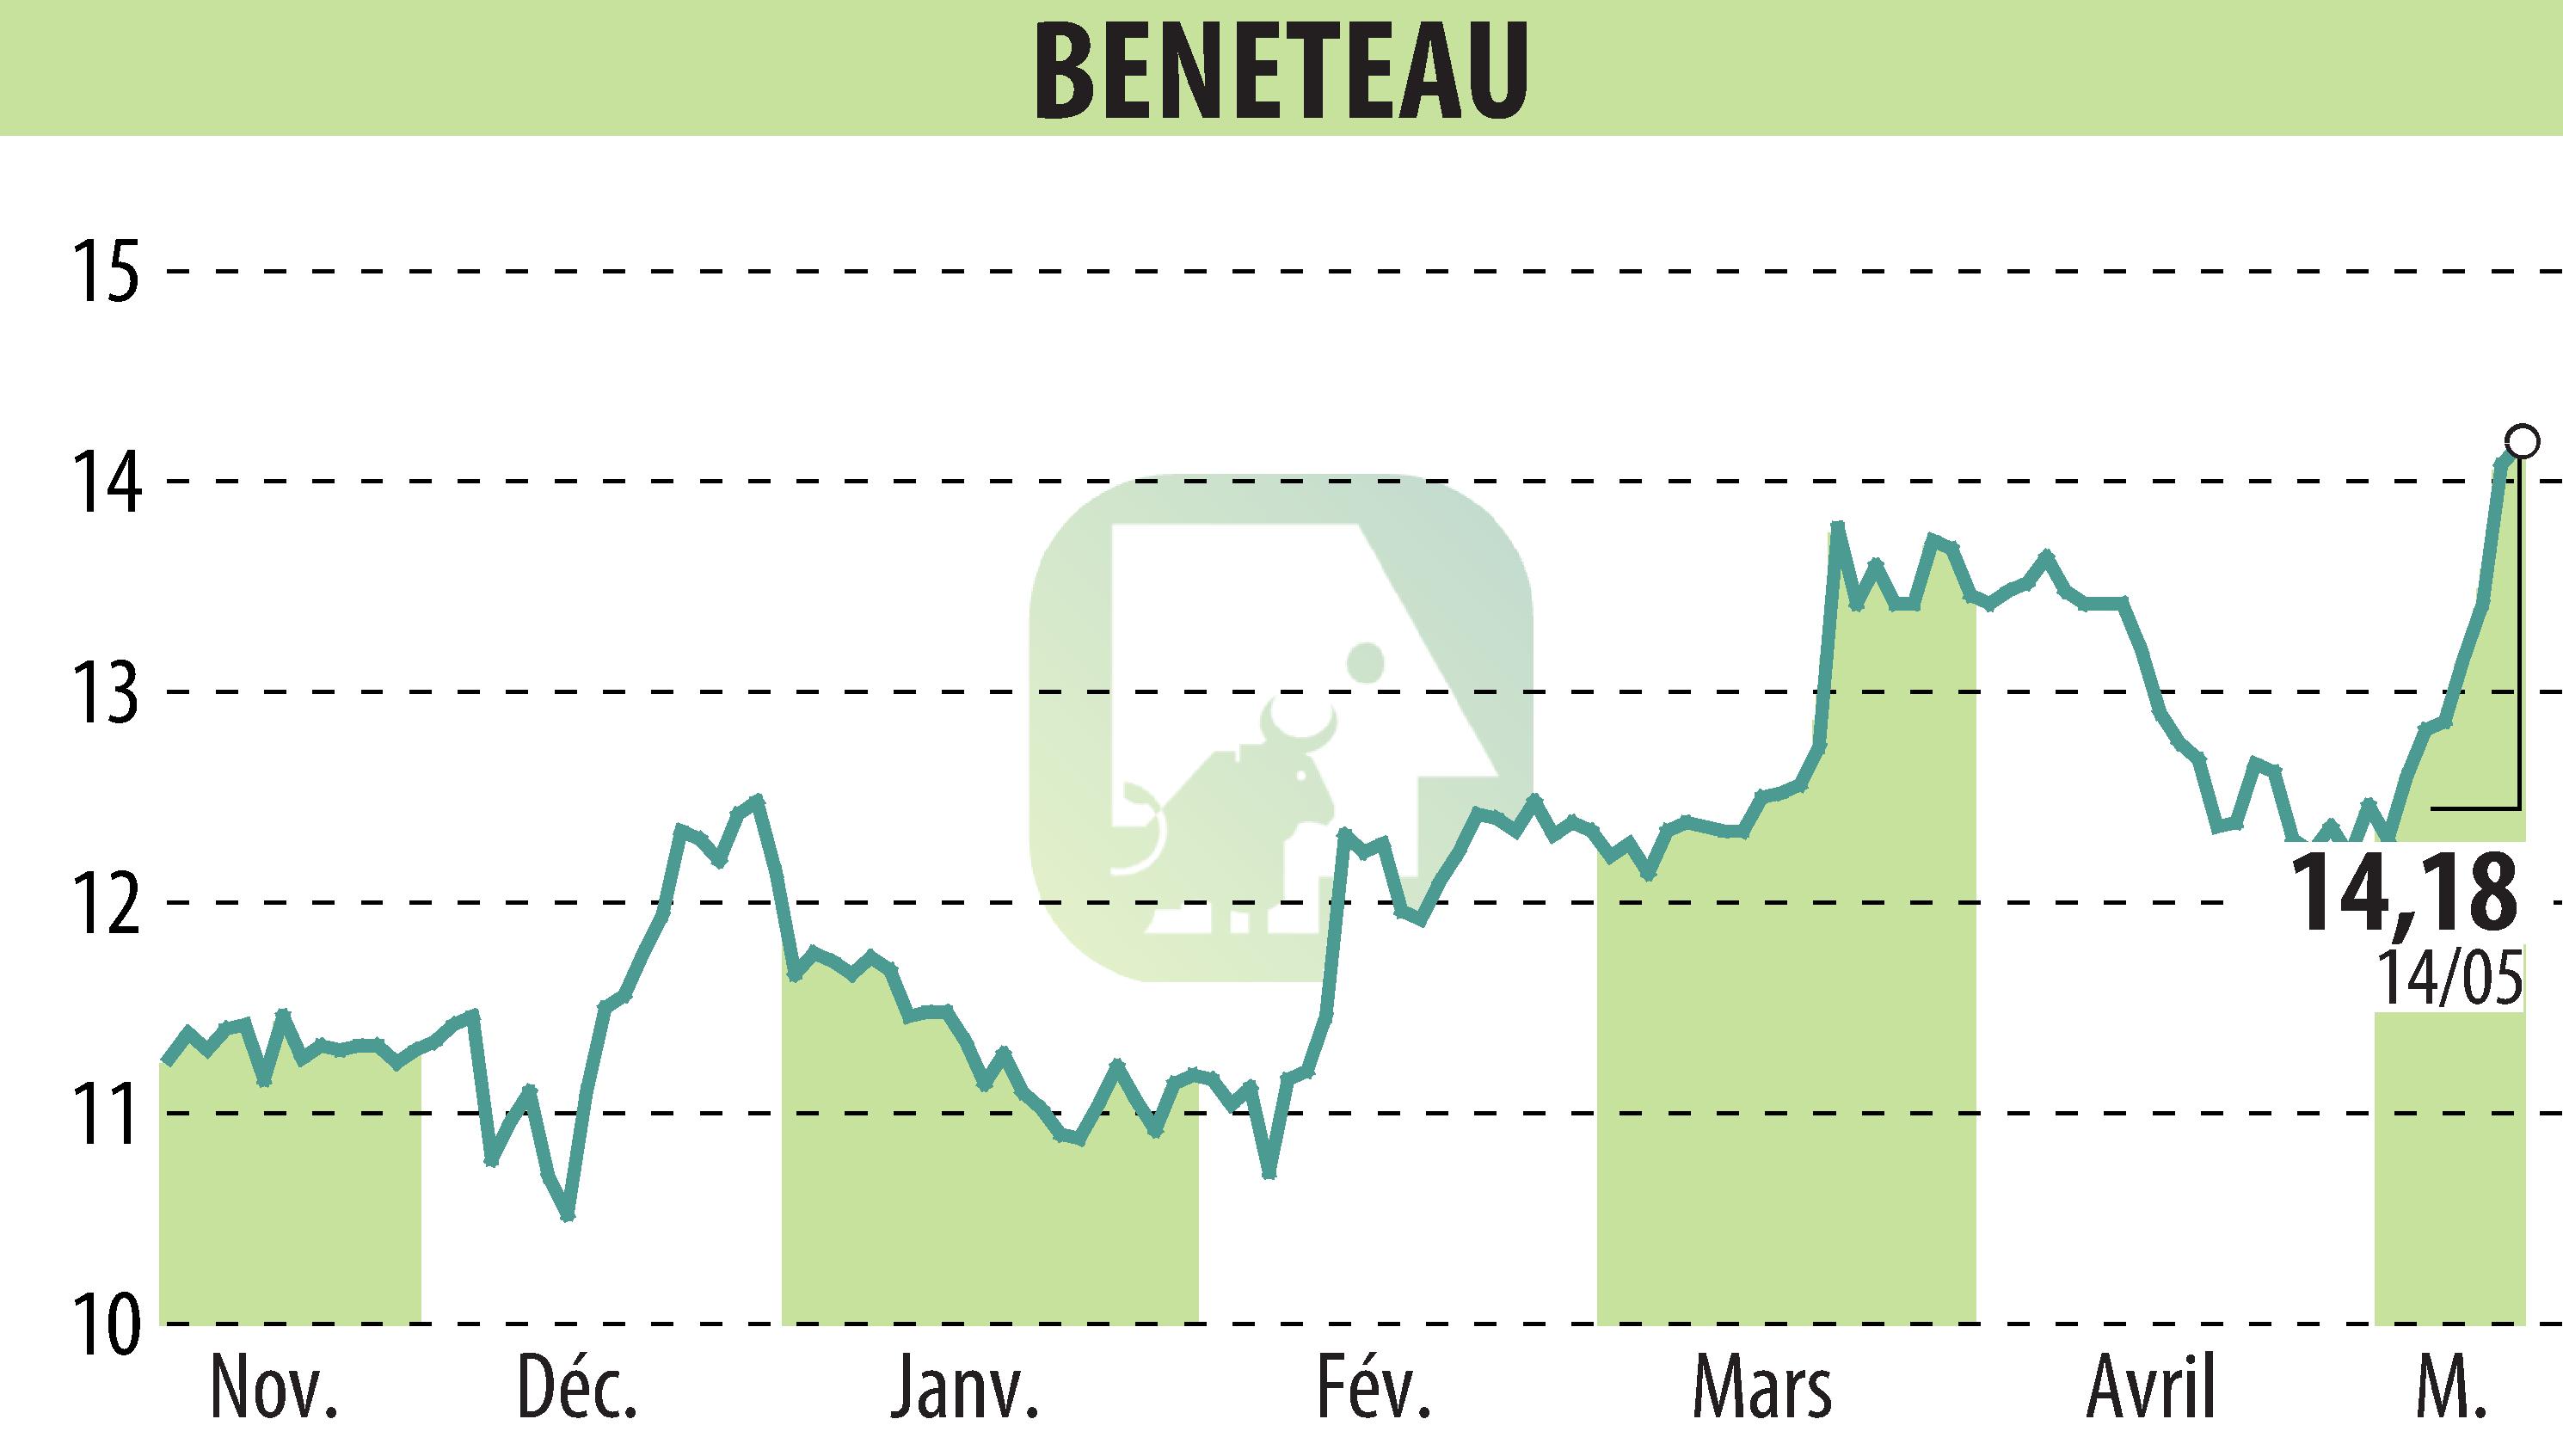 Stock price chart of BENETEAU (EPA:BEN) showing fluctuations.